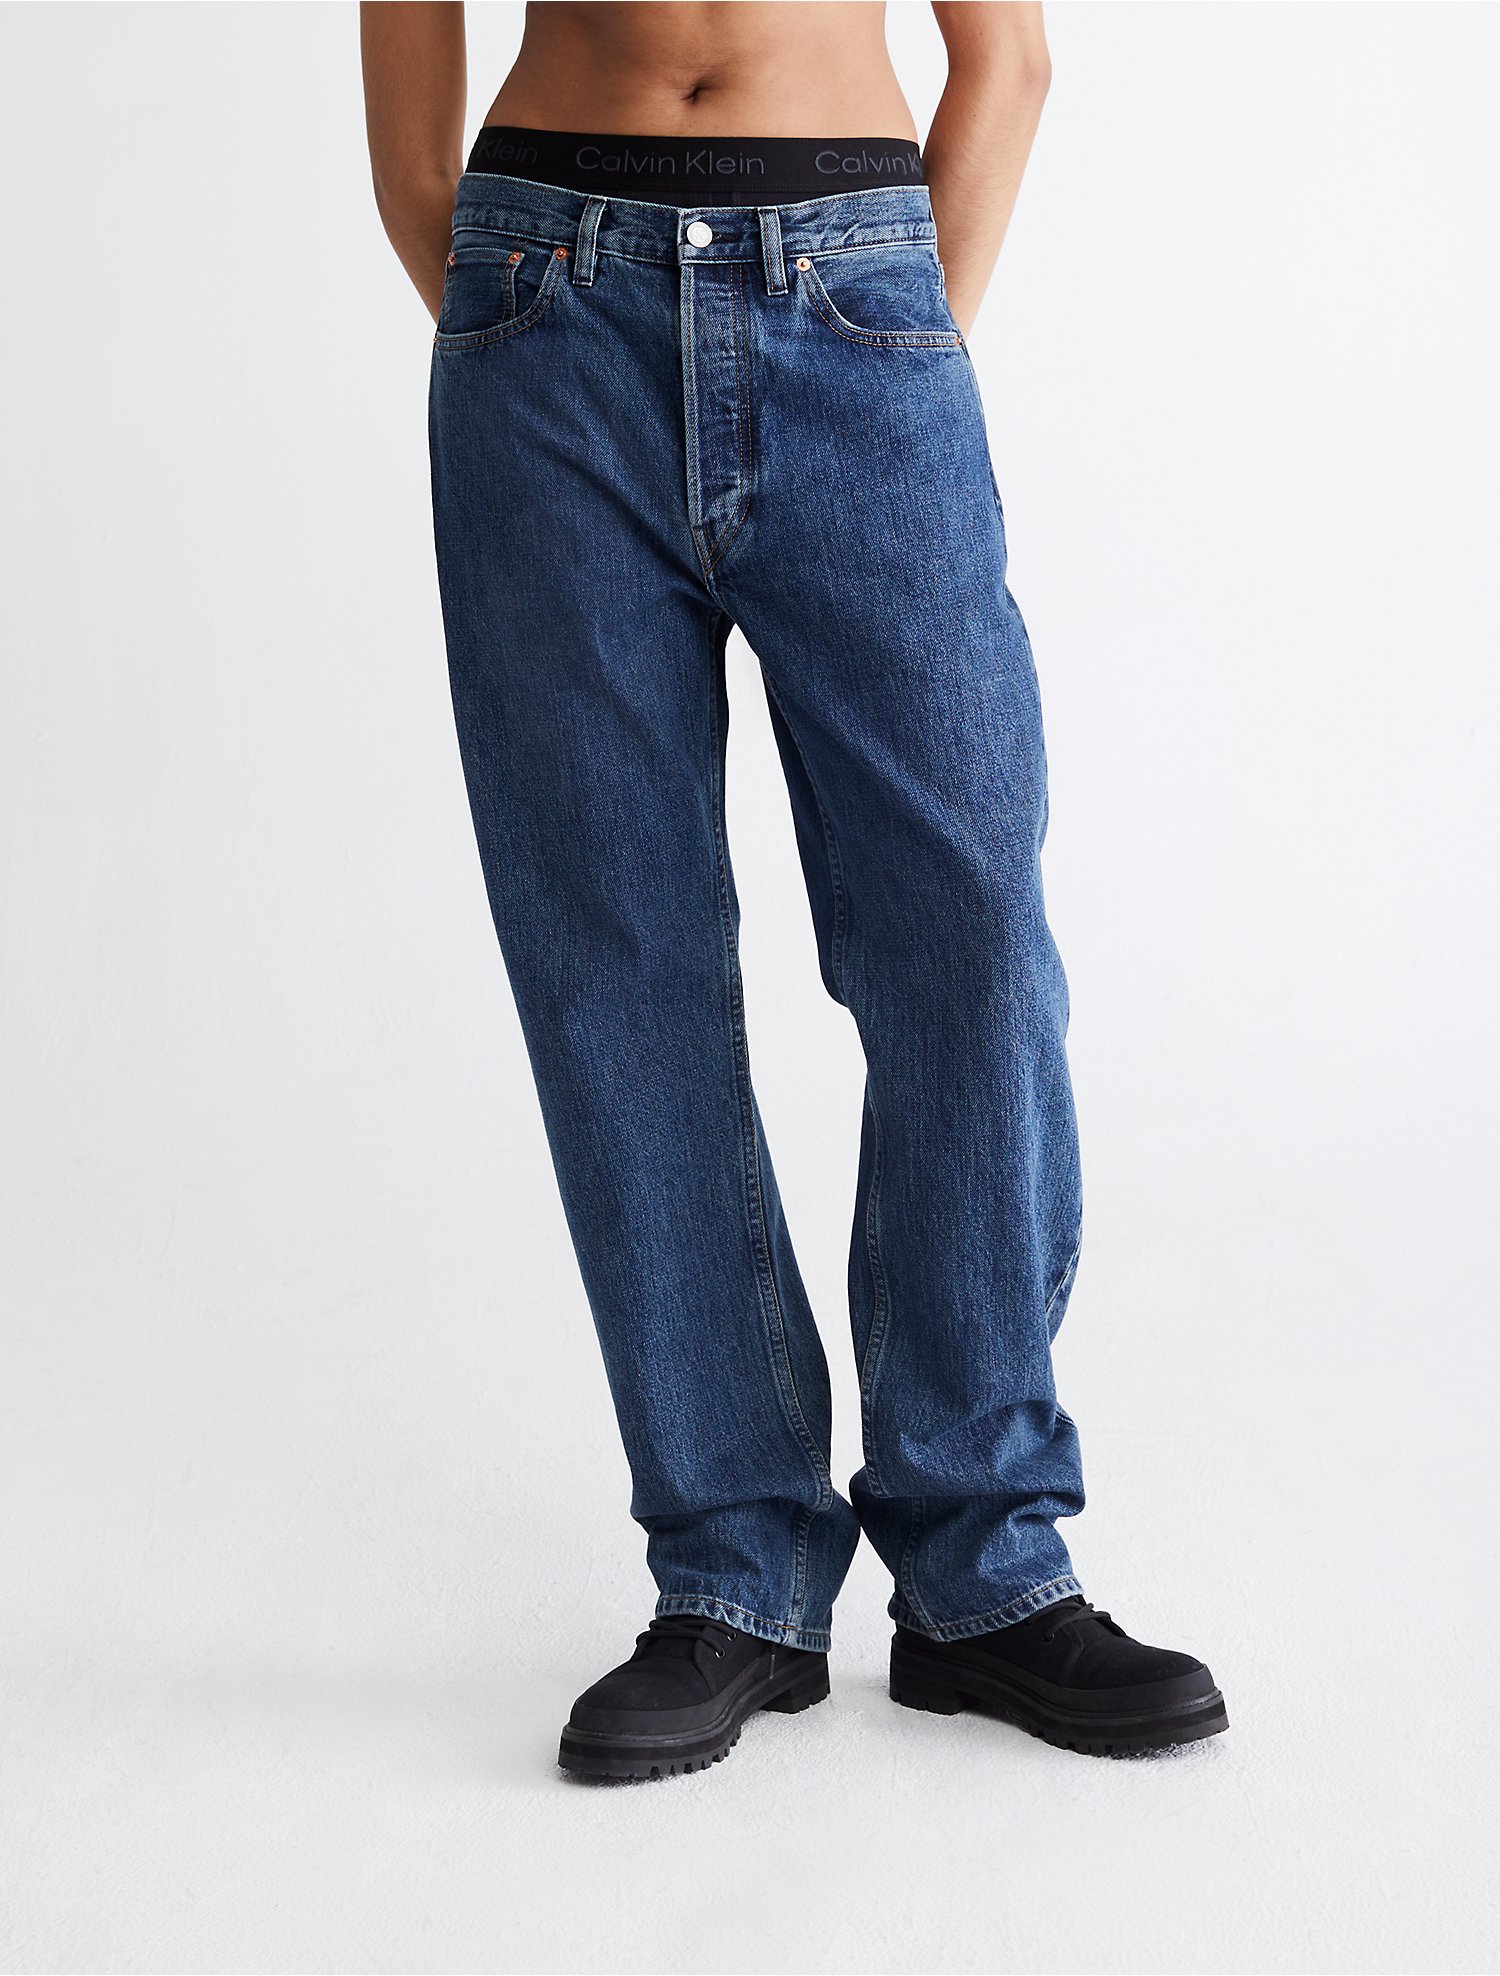 Introducir 62+ imagen calvin klein straight fit jeans